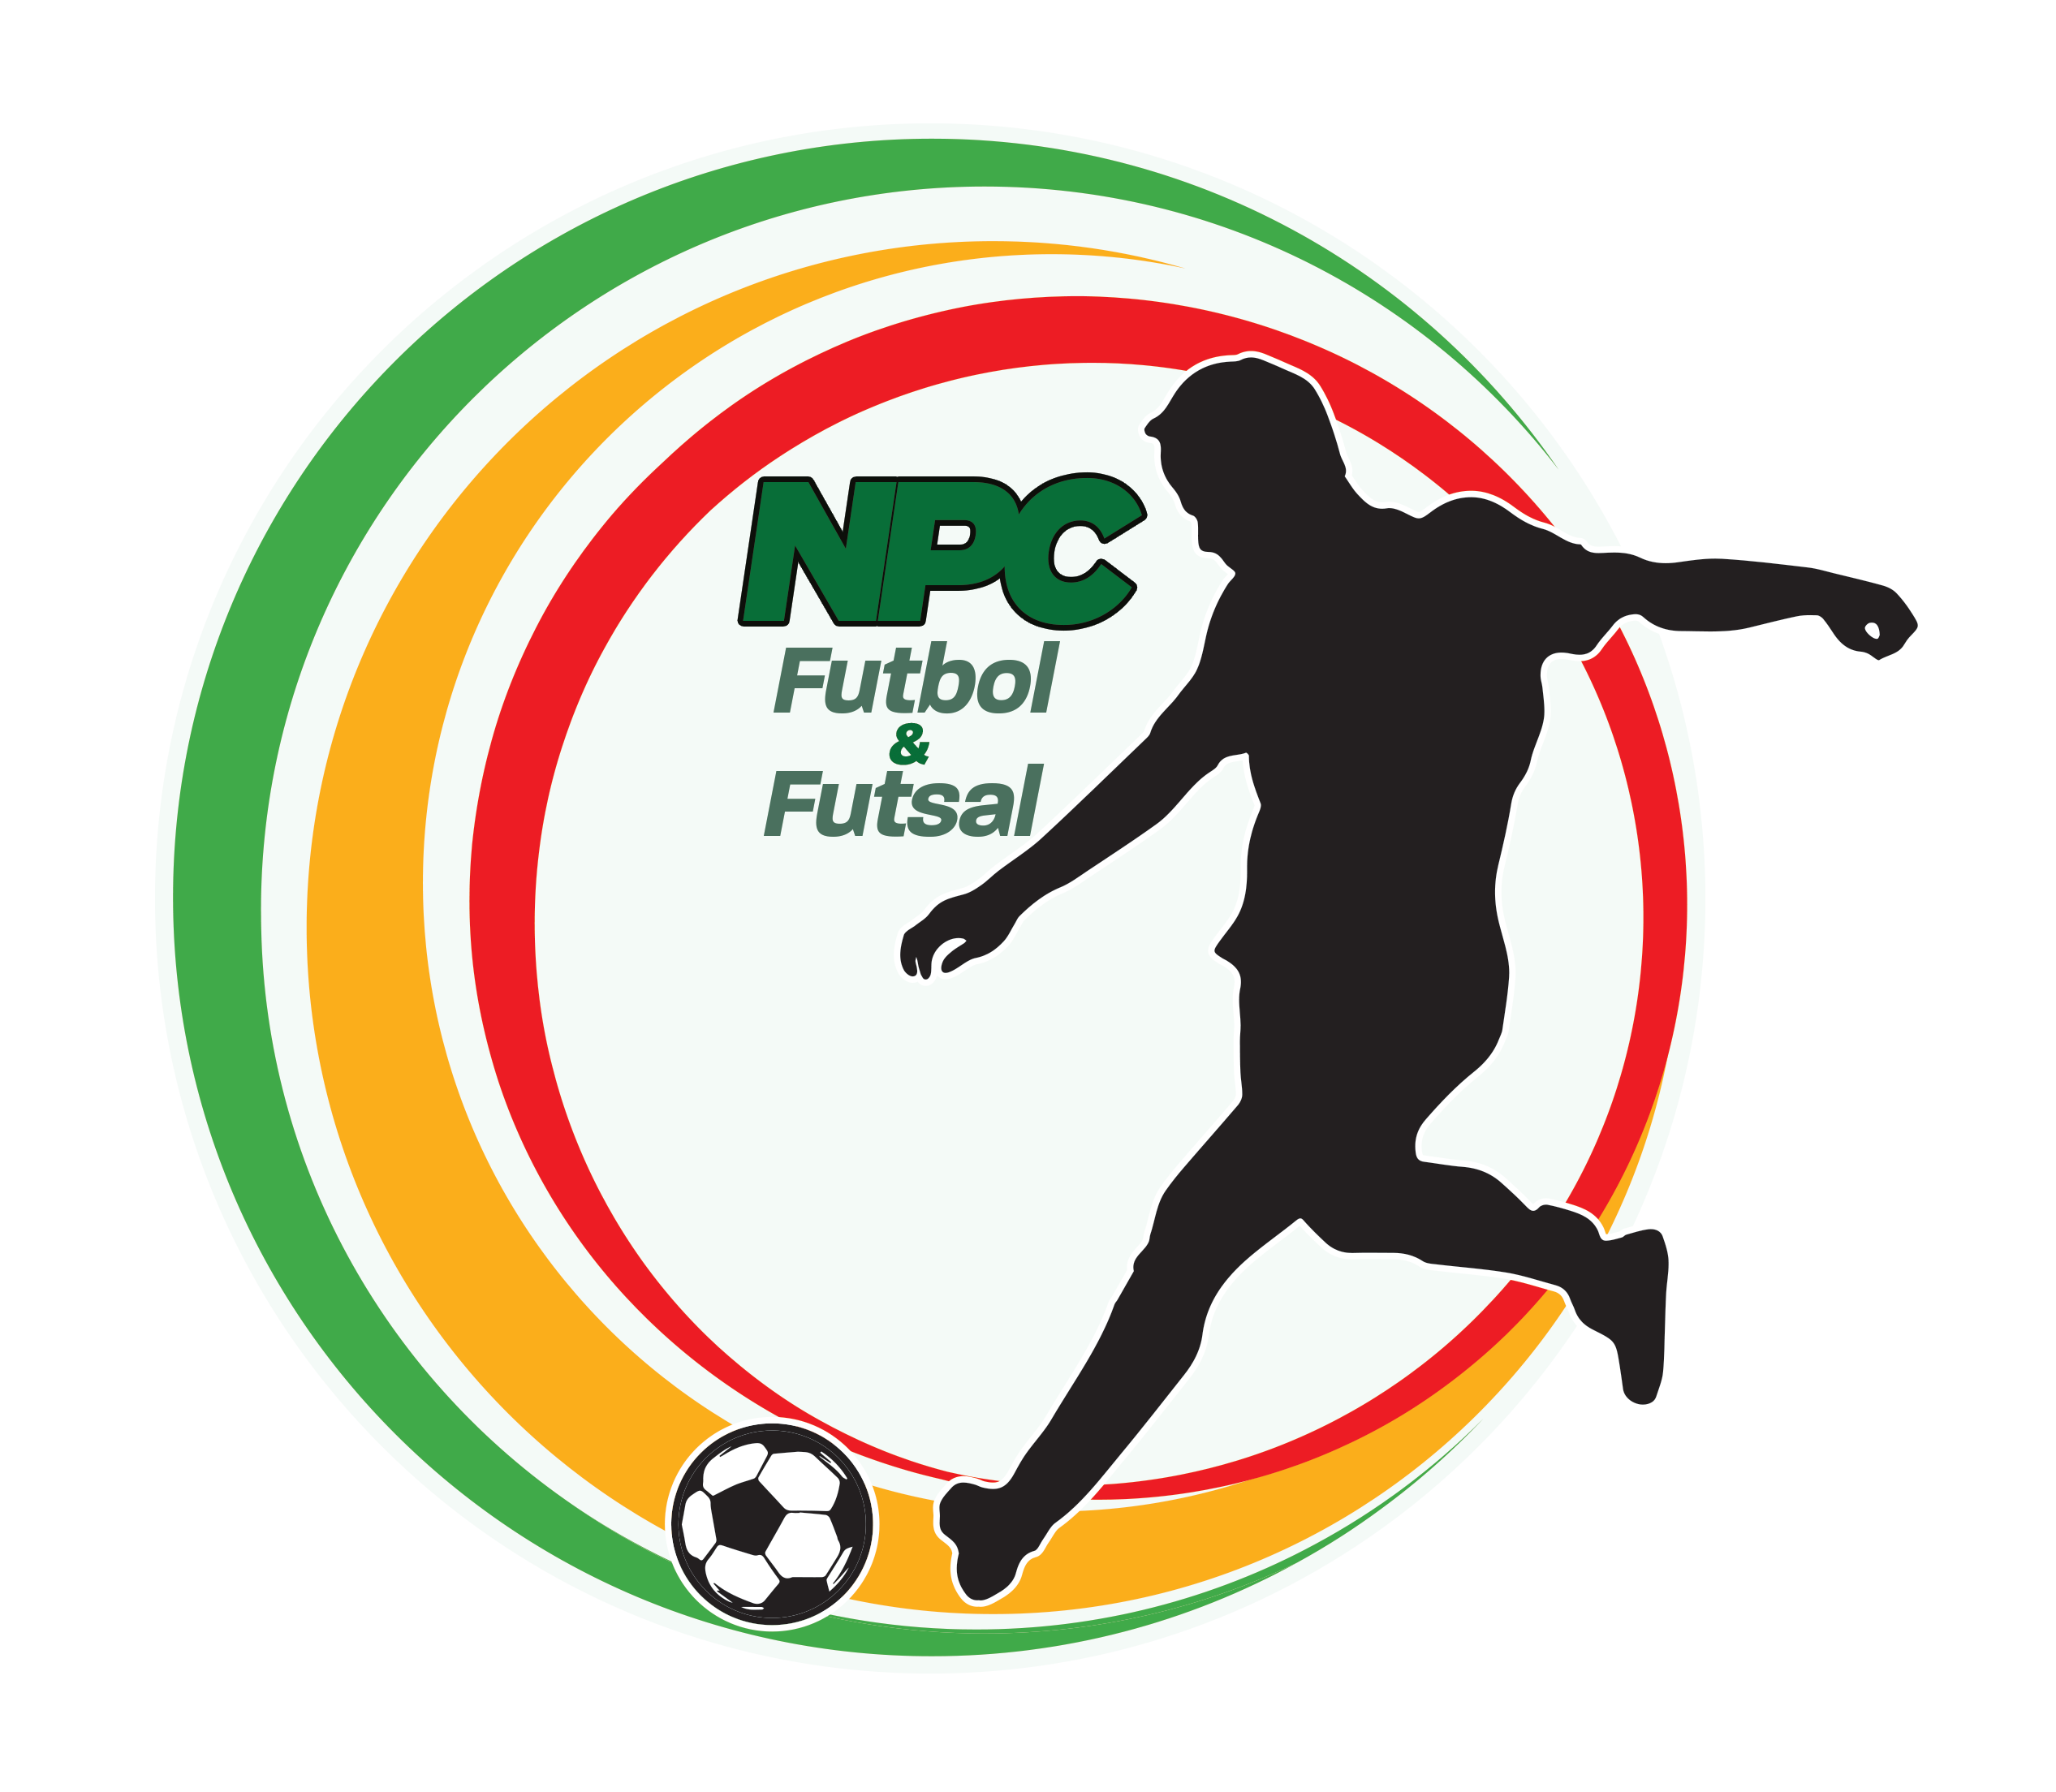 NPC Futbol & Futsal (NPC FF) team badge